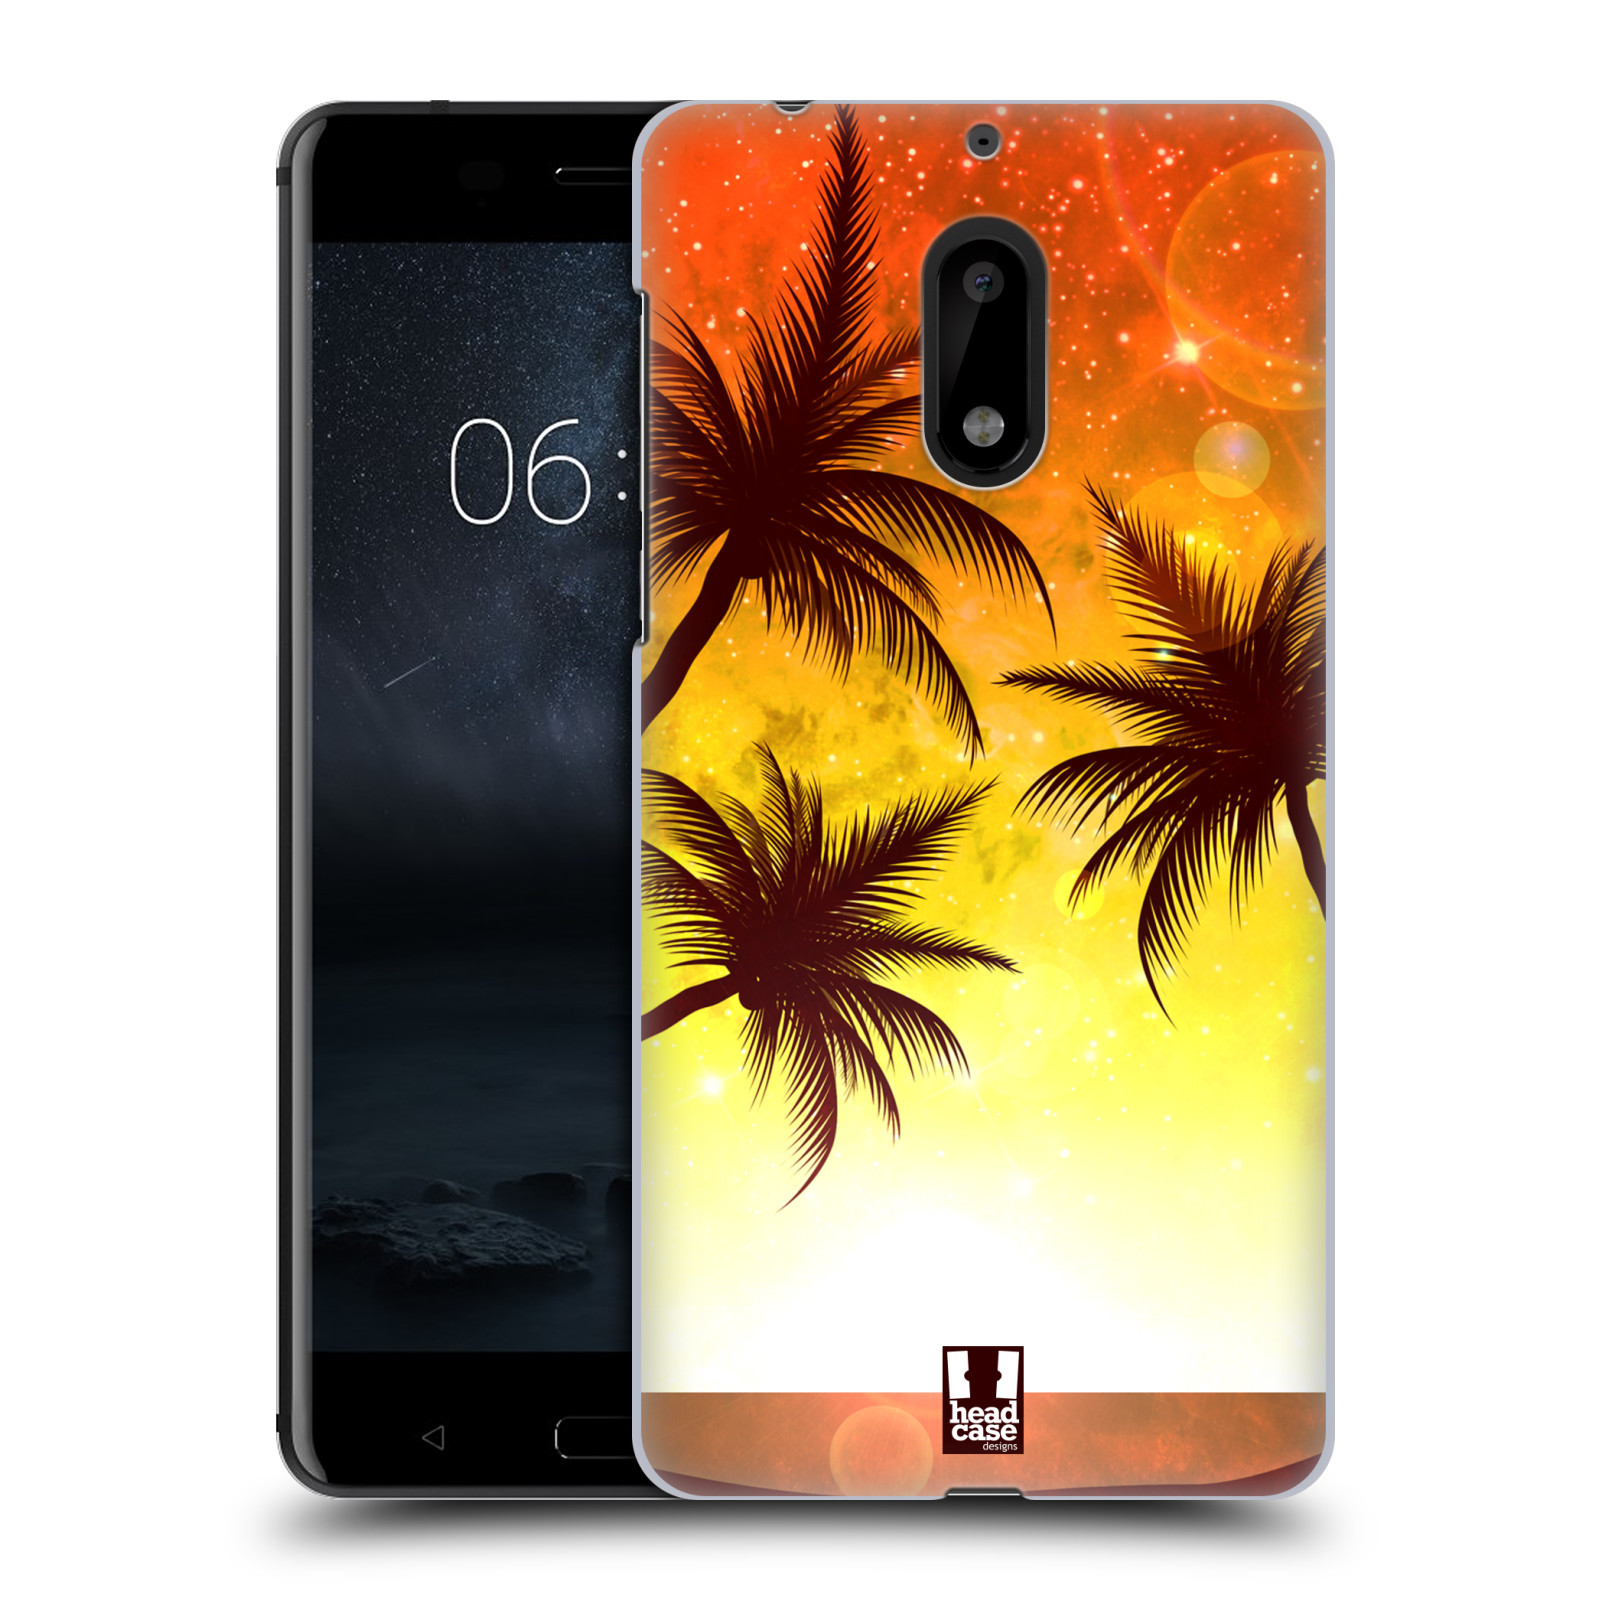 HEAD CASE plastový obal na mobil Nokia 6 vzor Kreslený motiv silueta moře a palmy ORANŽOVÁ